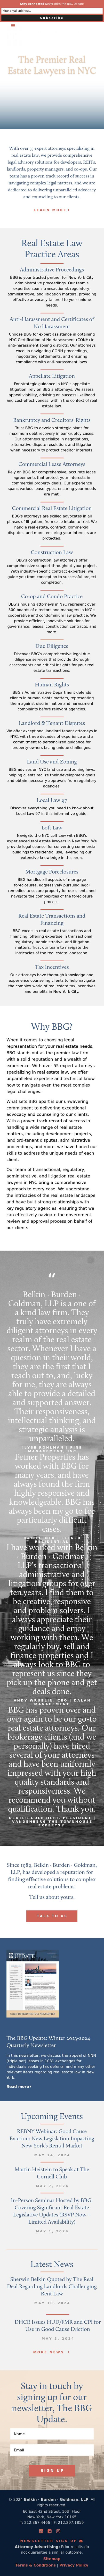 Belkin Burden Wenig & Goldman, LLP - New York NY Lawyers